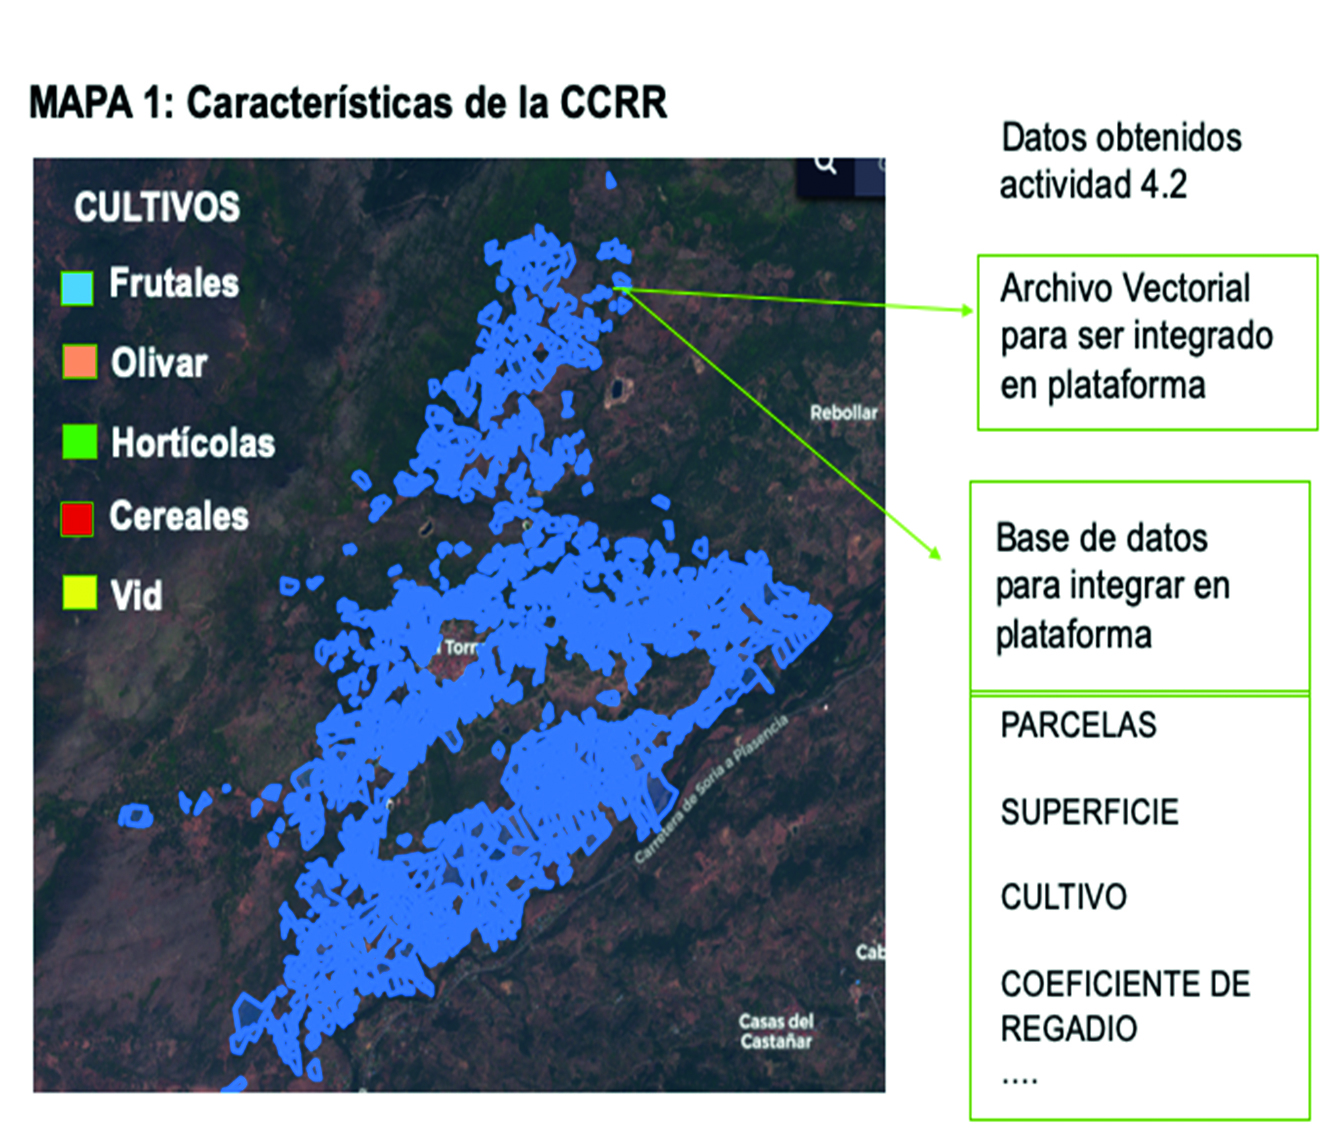 MAPA 1. CARACTERISTICAS DE LA CCRR